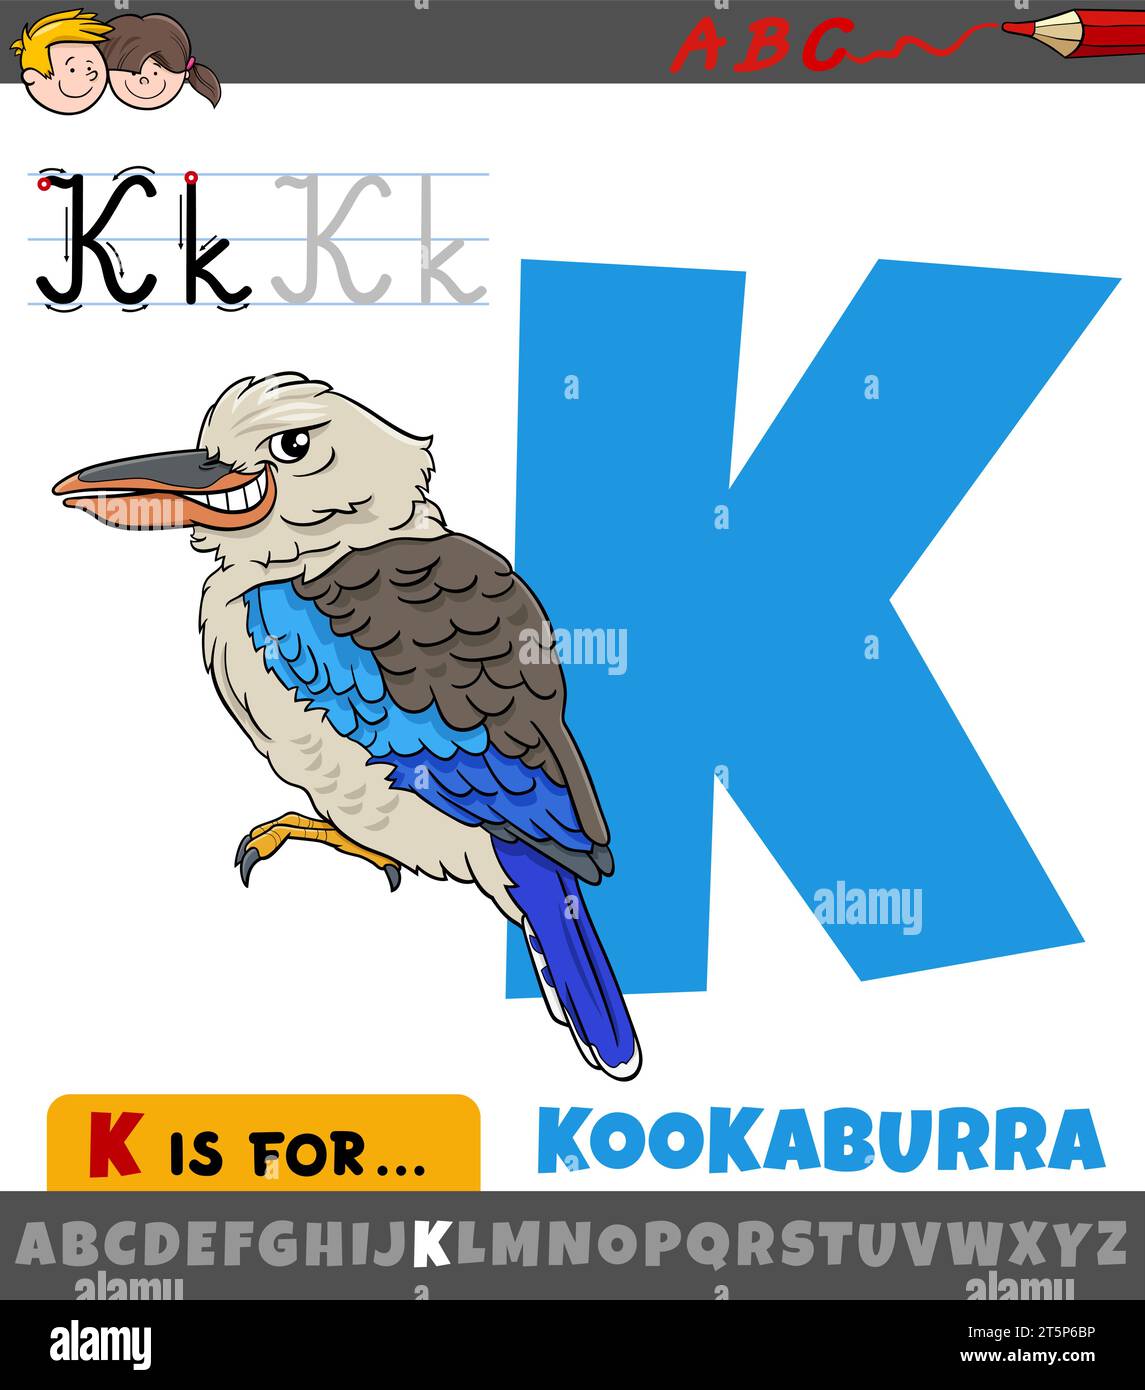 Educational cartoon illustration of letter K from alphabet with kookaburra bird animal character Stock Vector